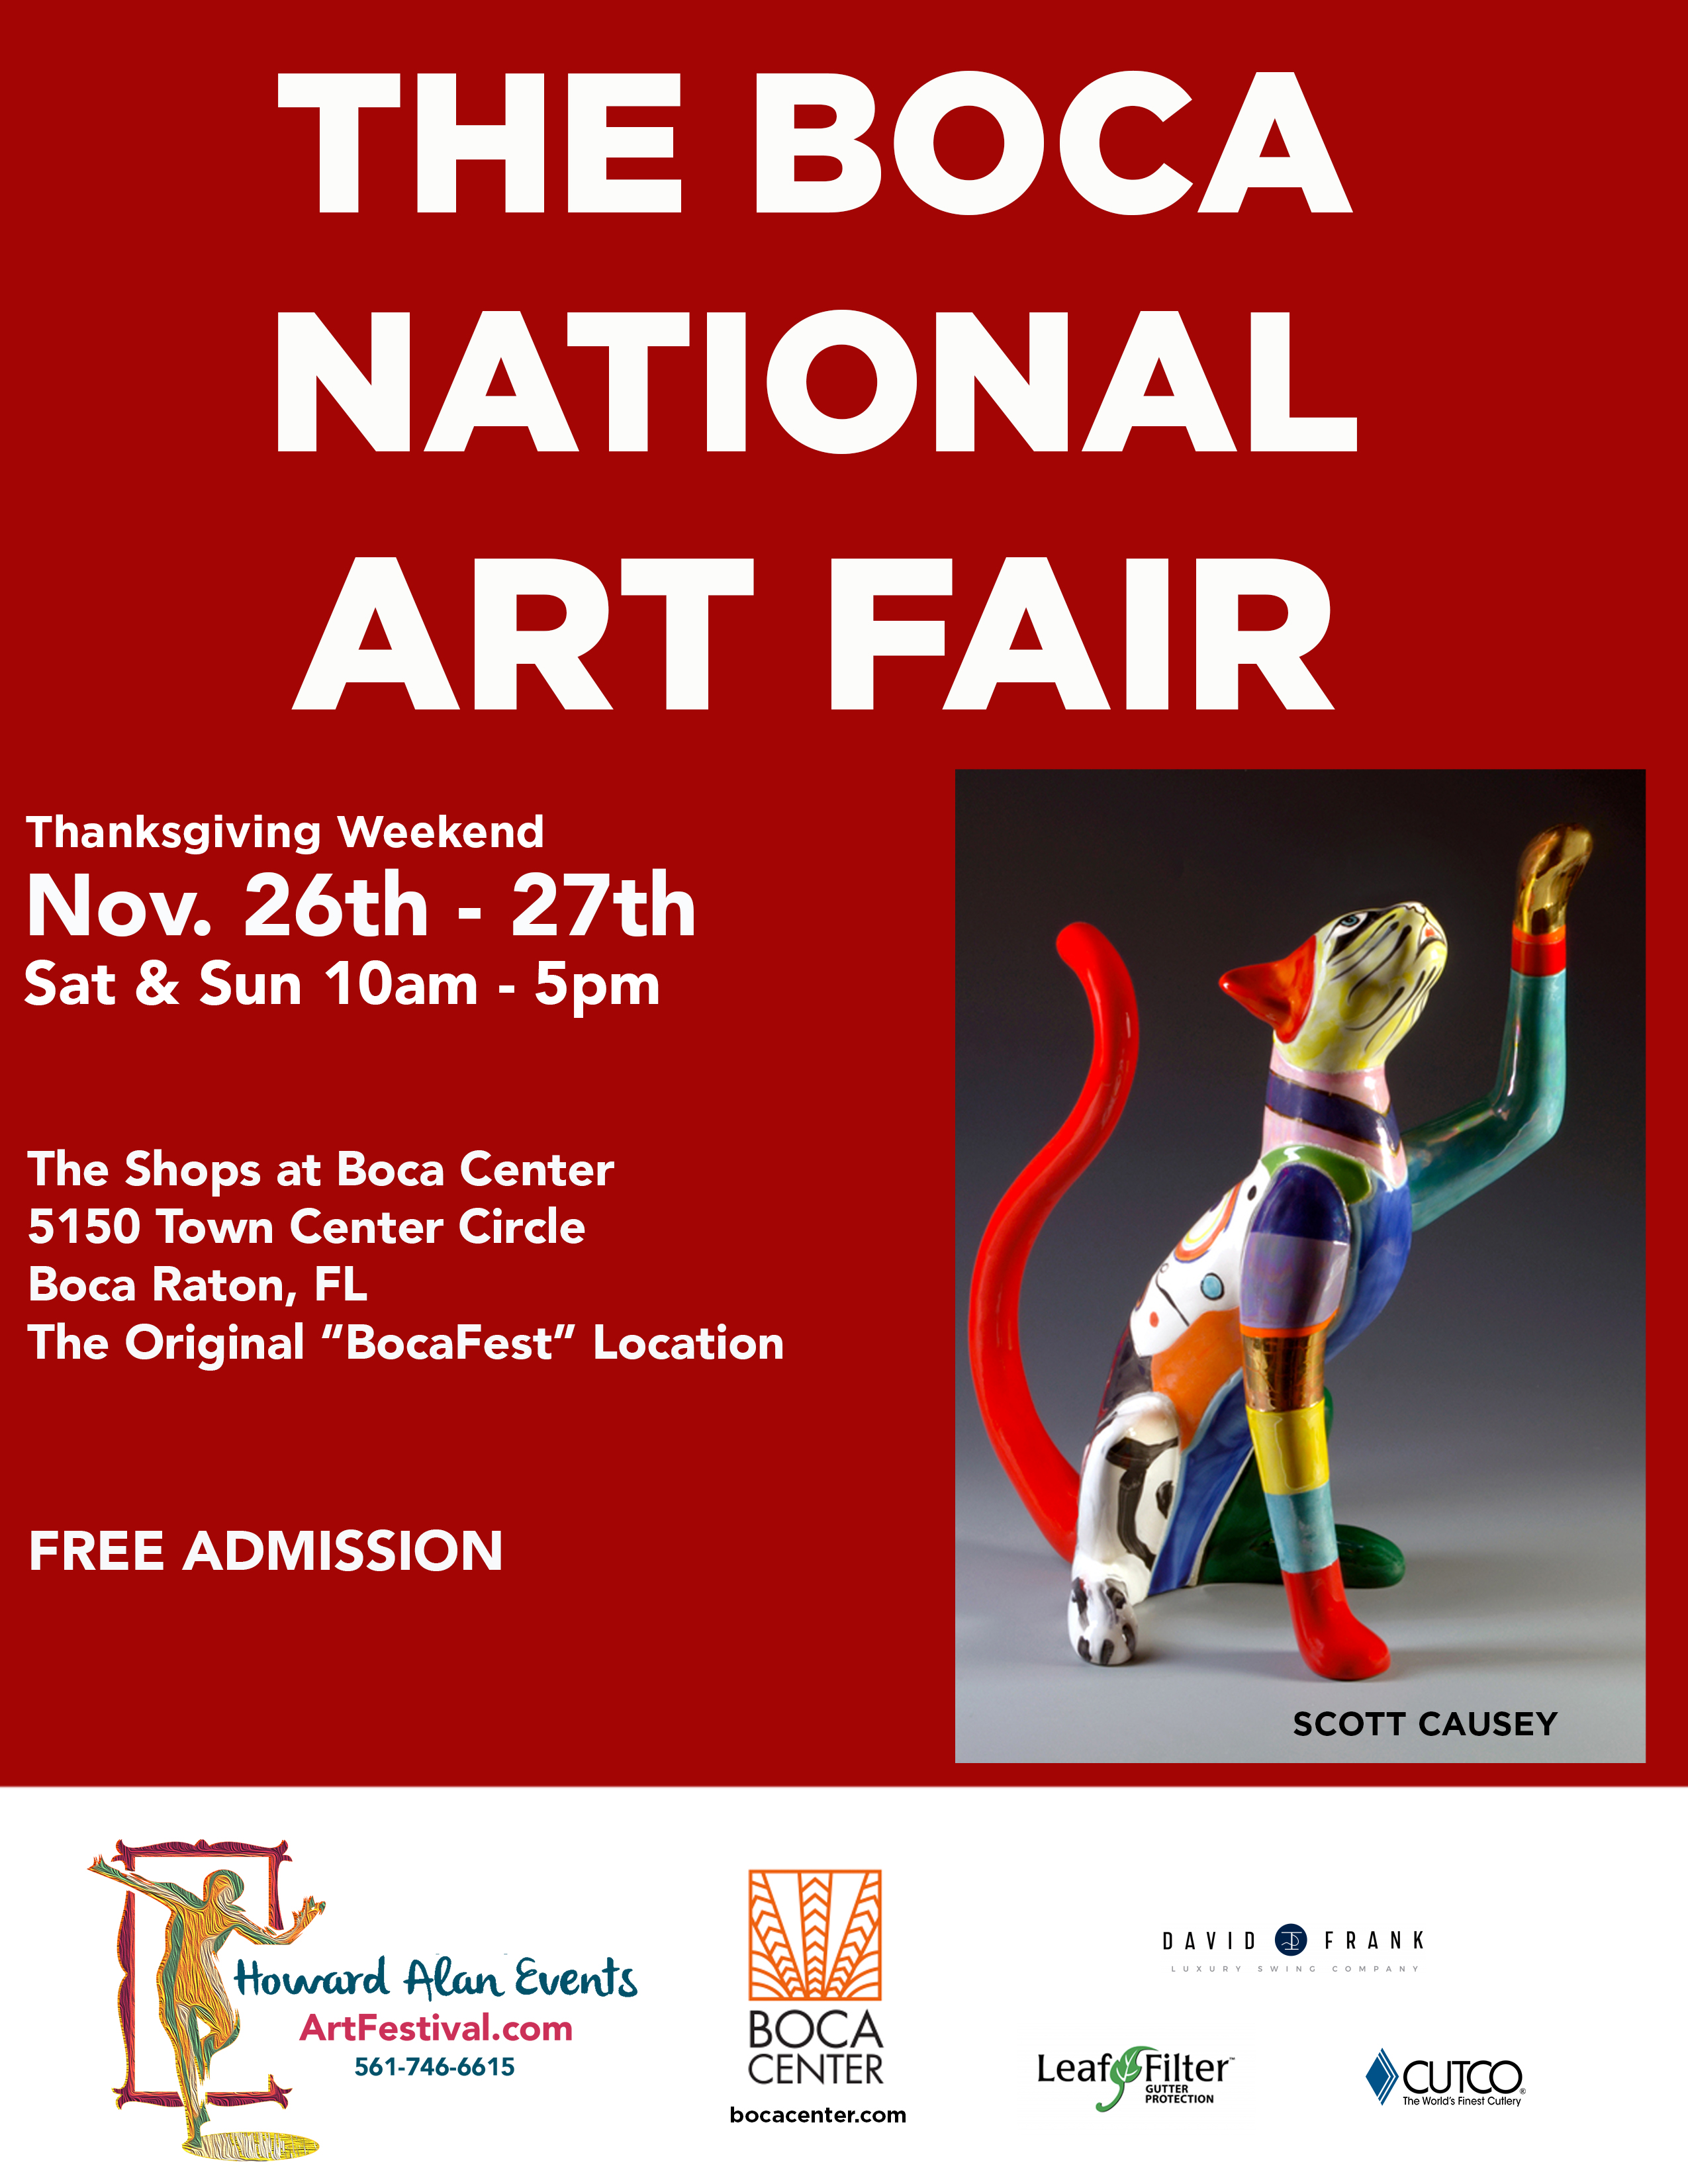 The Boca National Art Fair at Boca Center